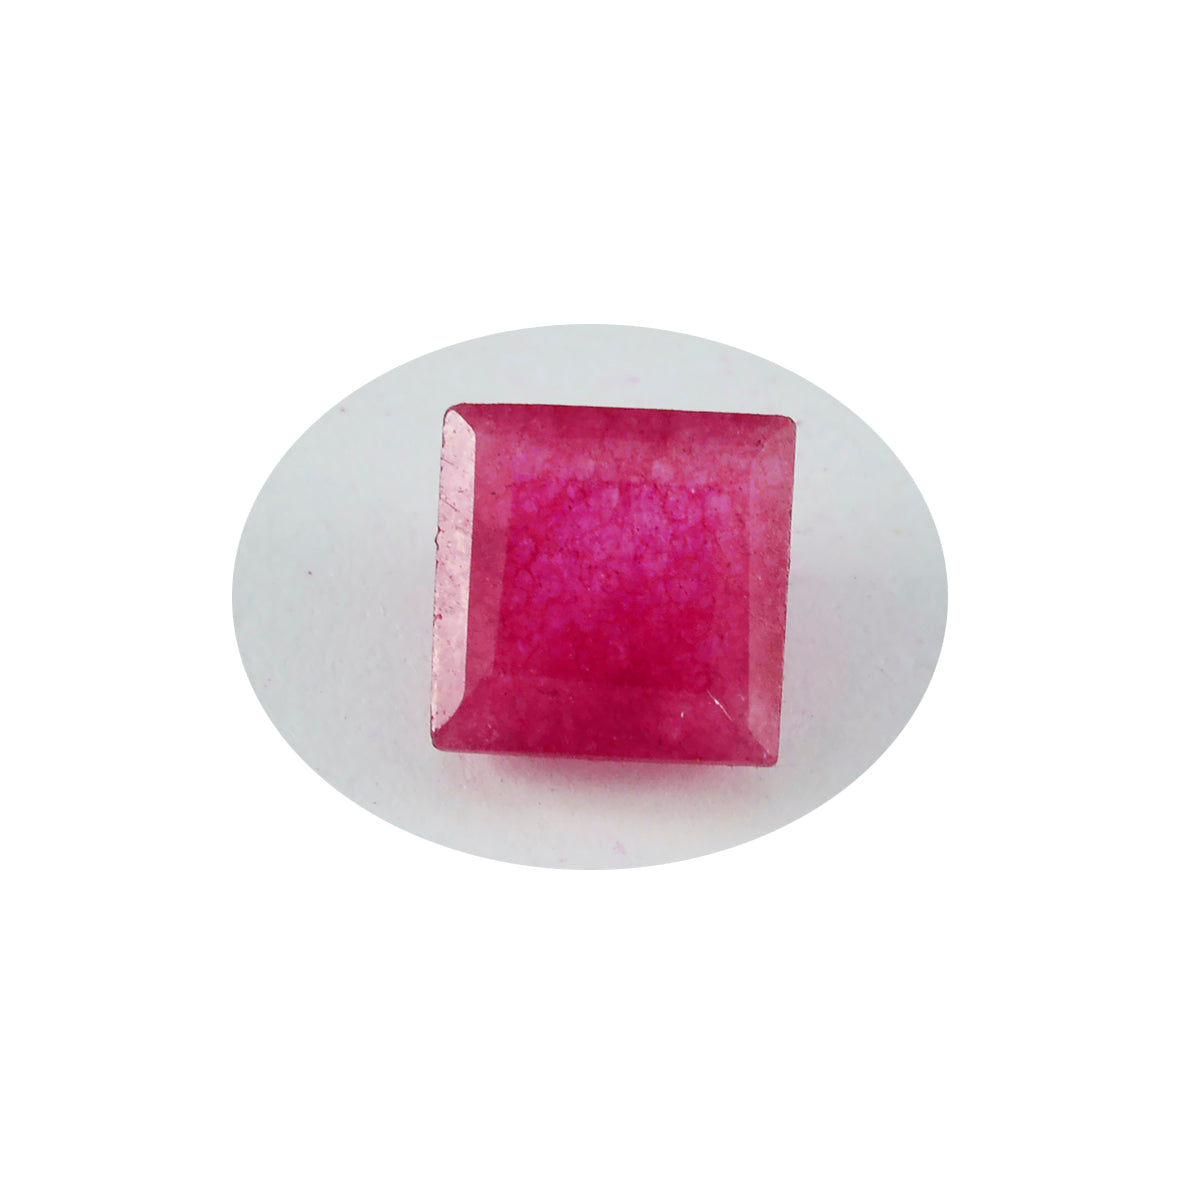 Riyogems 1PC echte rode jaspis gefacetteerd 10x10 mm vierkante vorm mooie kwaliteitsedelsteen